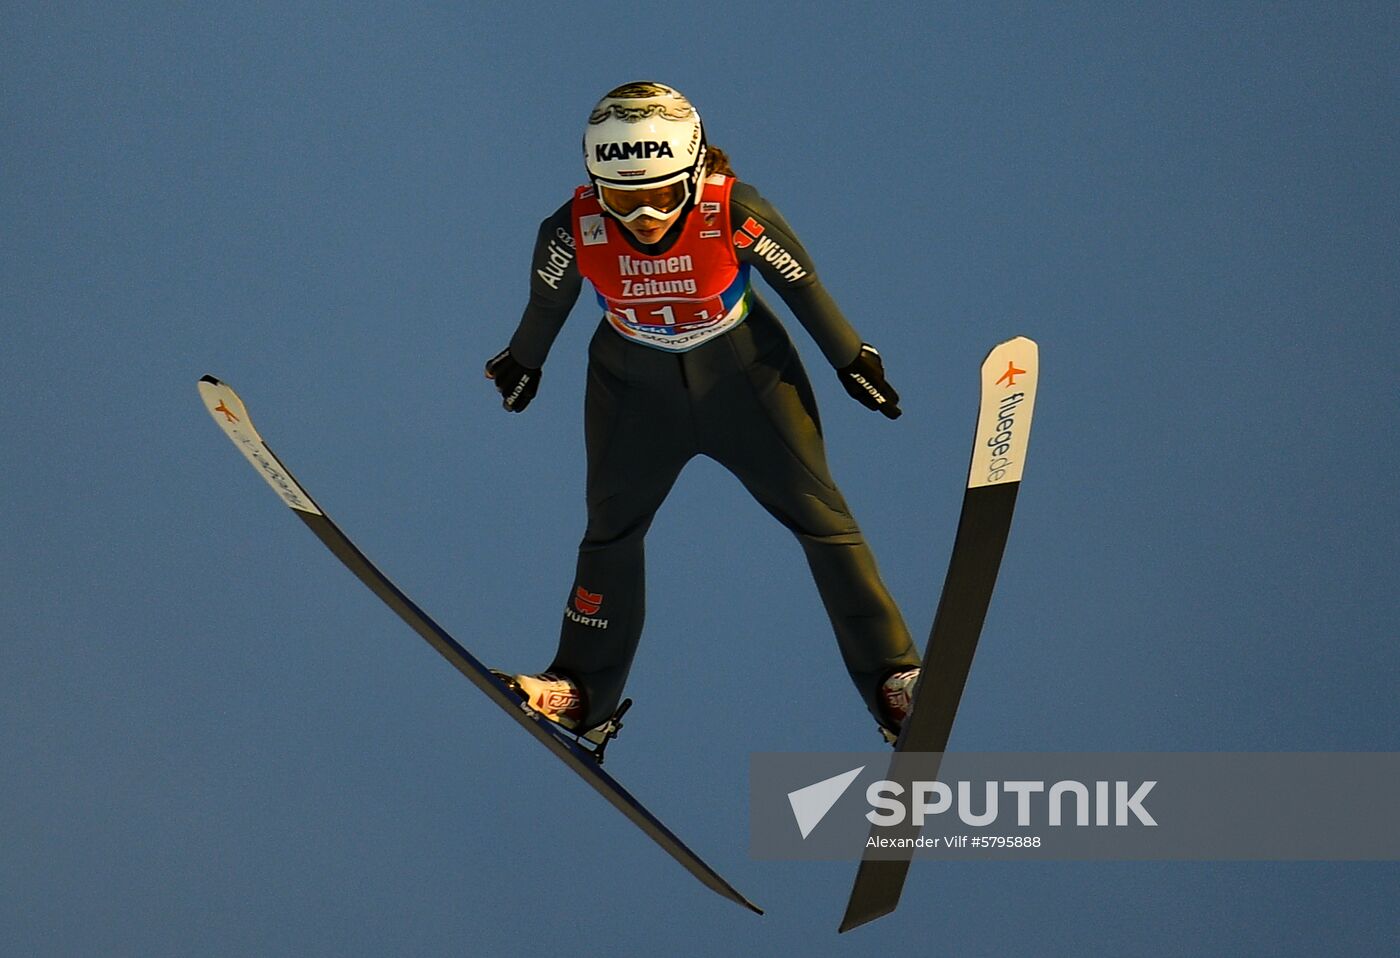 Austria Ski Worlds Jumping Ladies